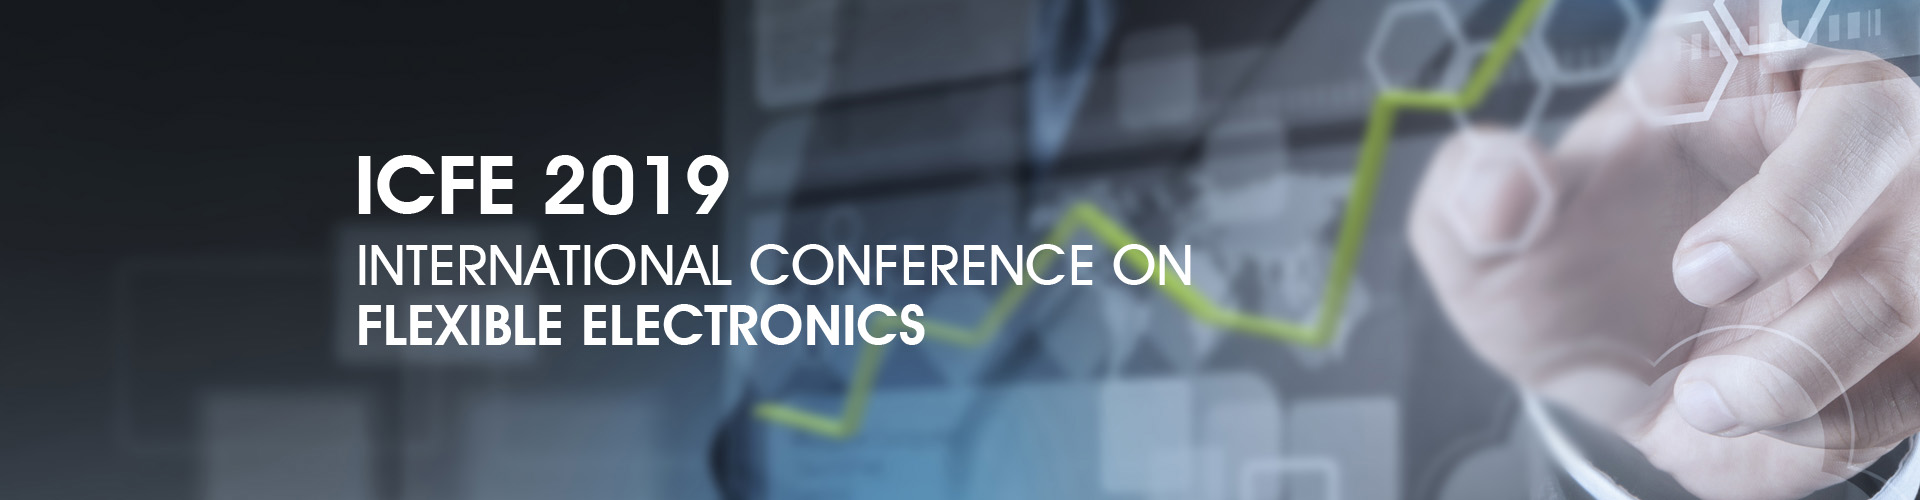 International Conference On Flexible Electronics